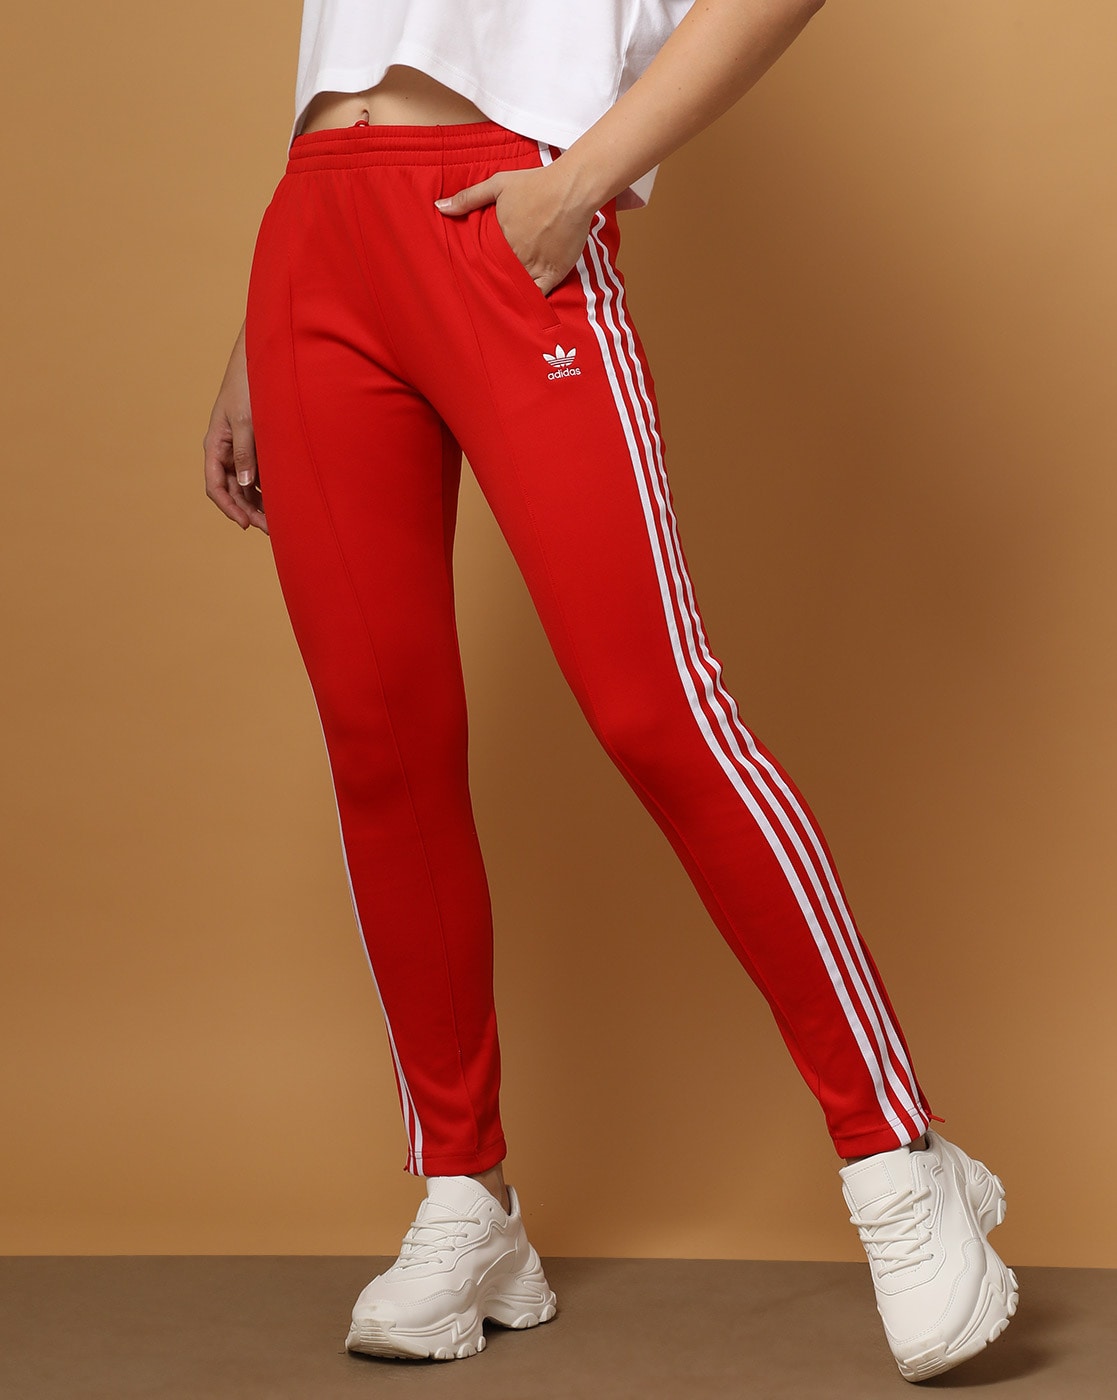 adidas - Tiro 15 Training Pants | Adidas outfit men, Red pants outfit, Red  pants men